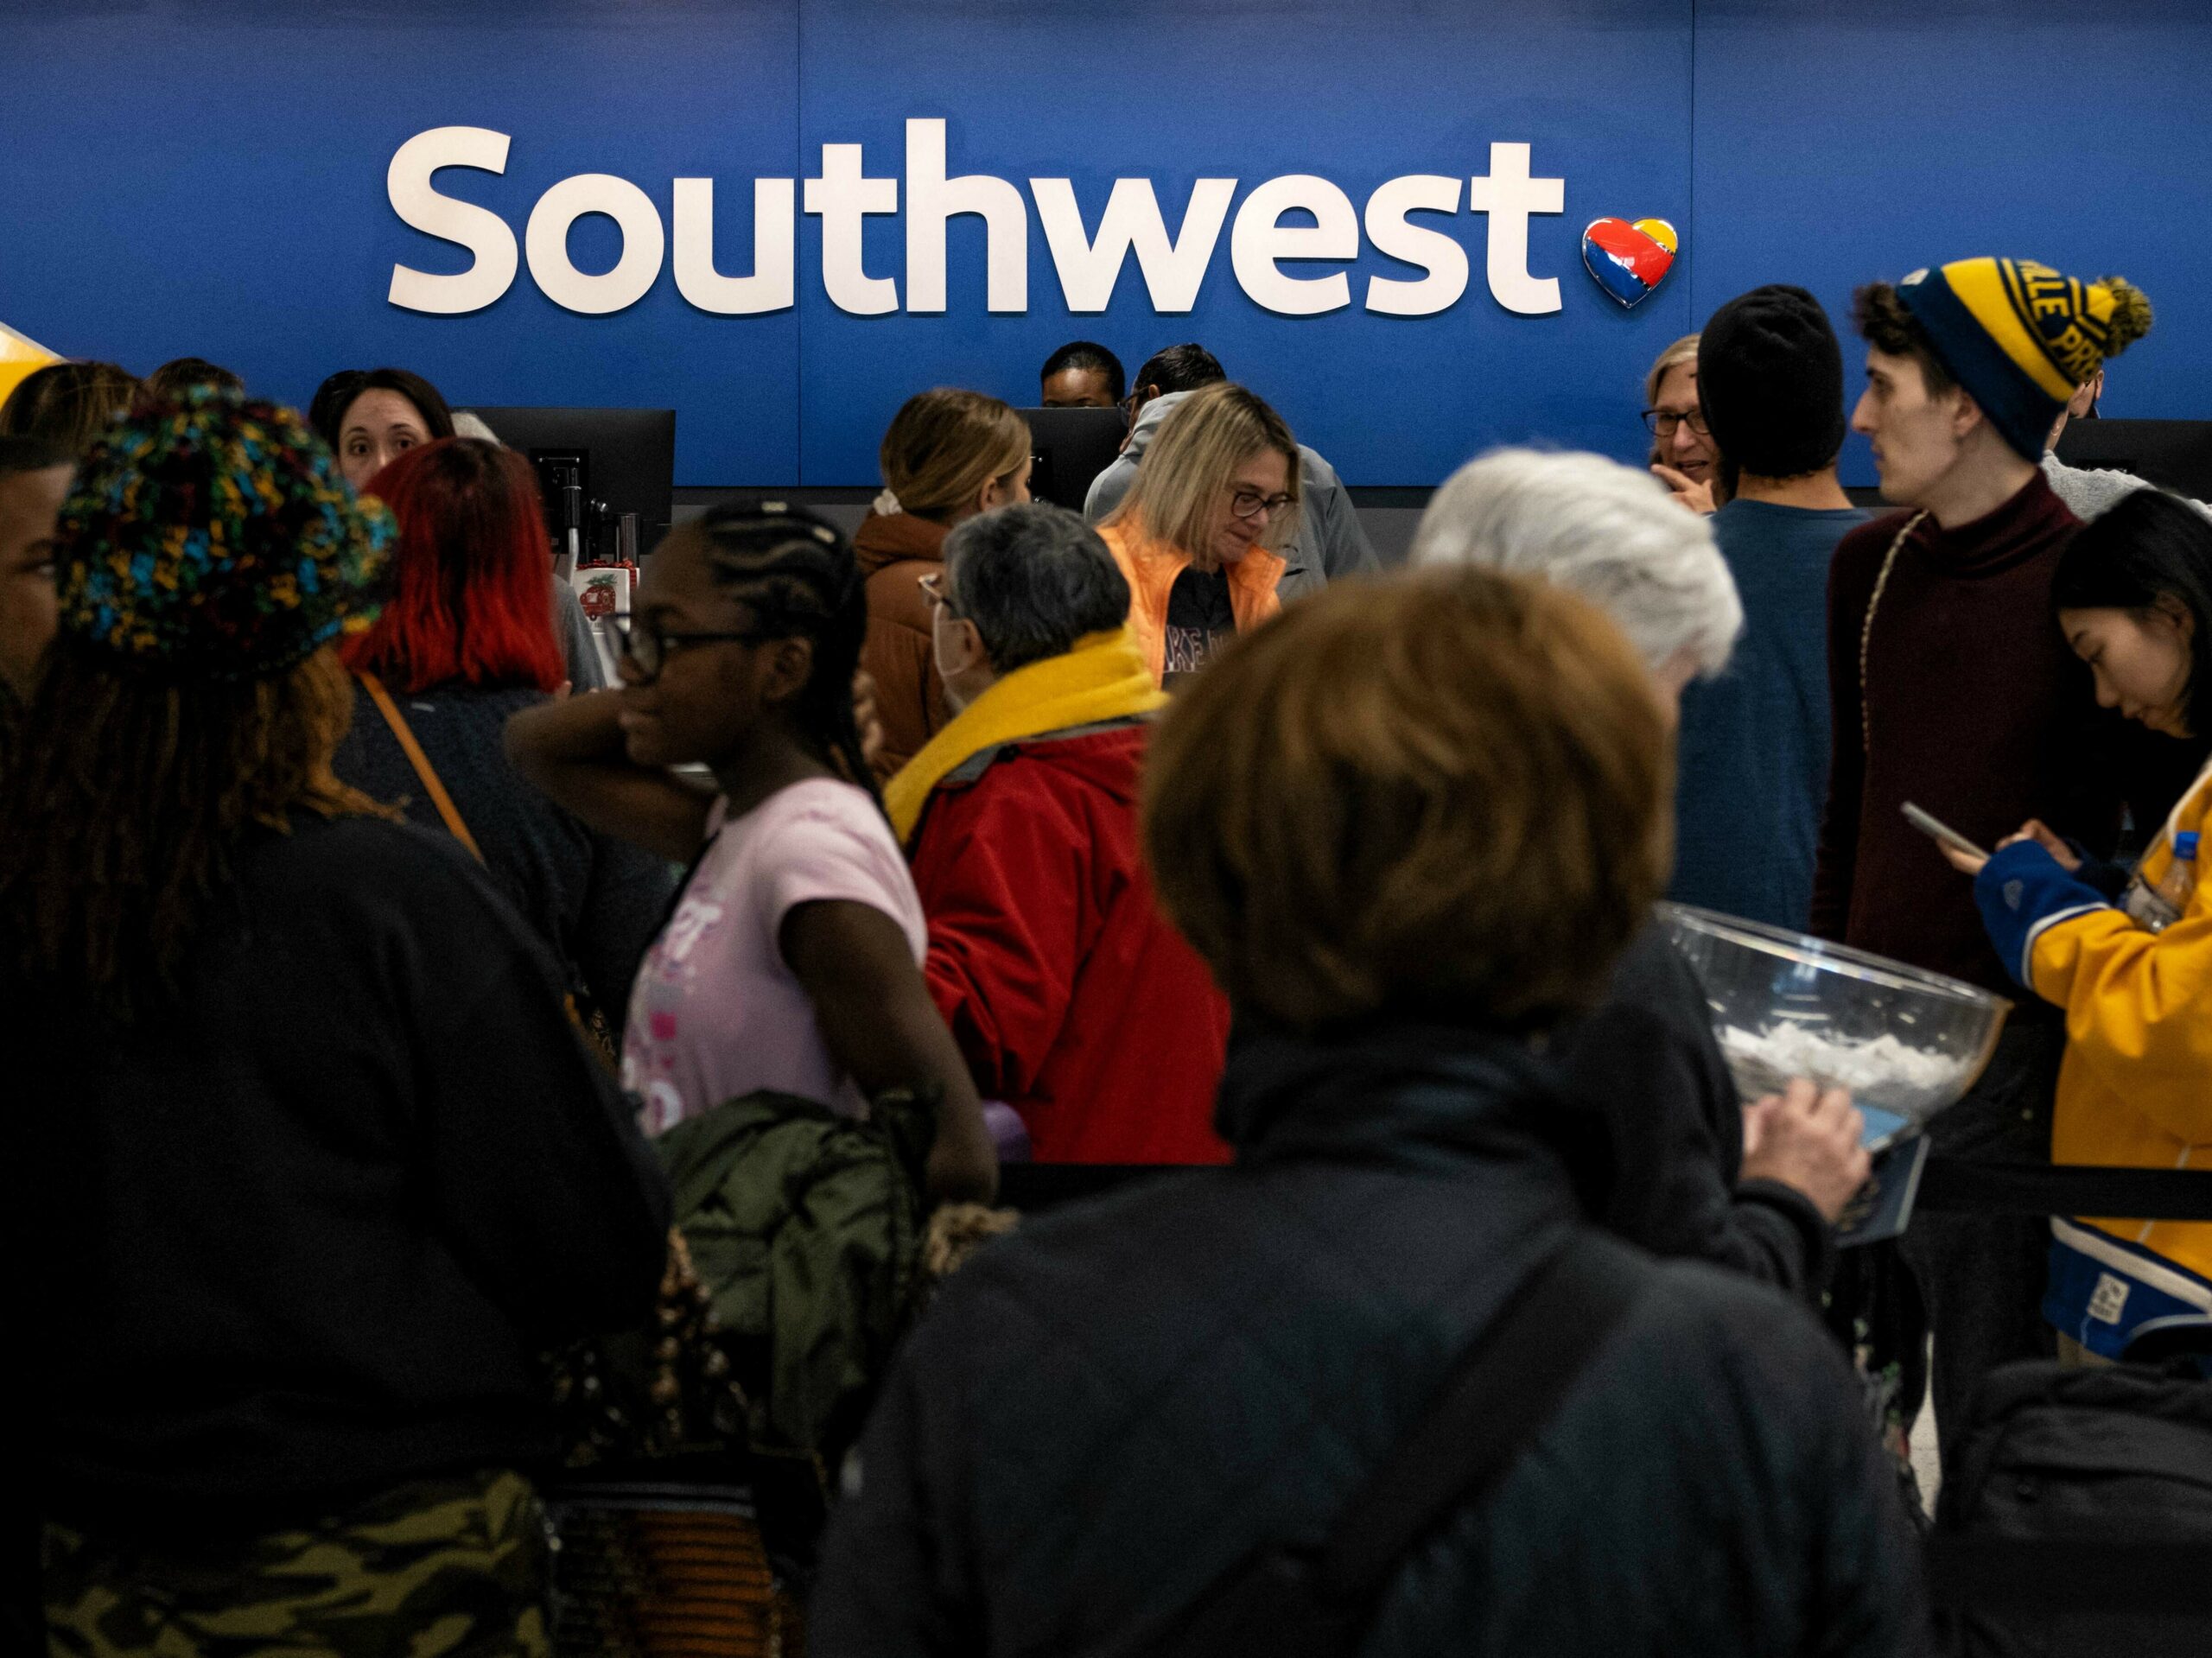 Southwest Airlines passengers